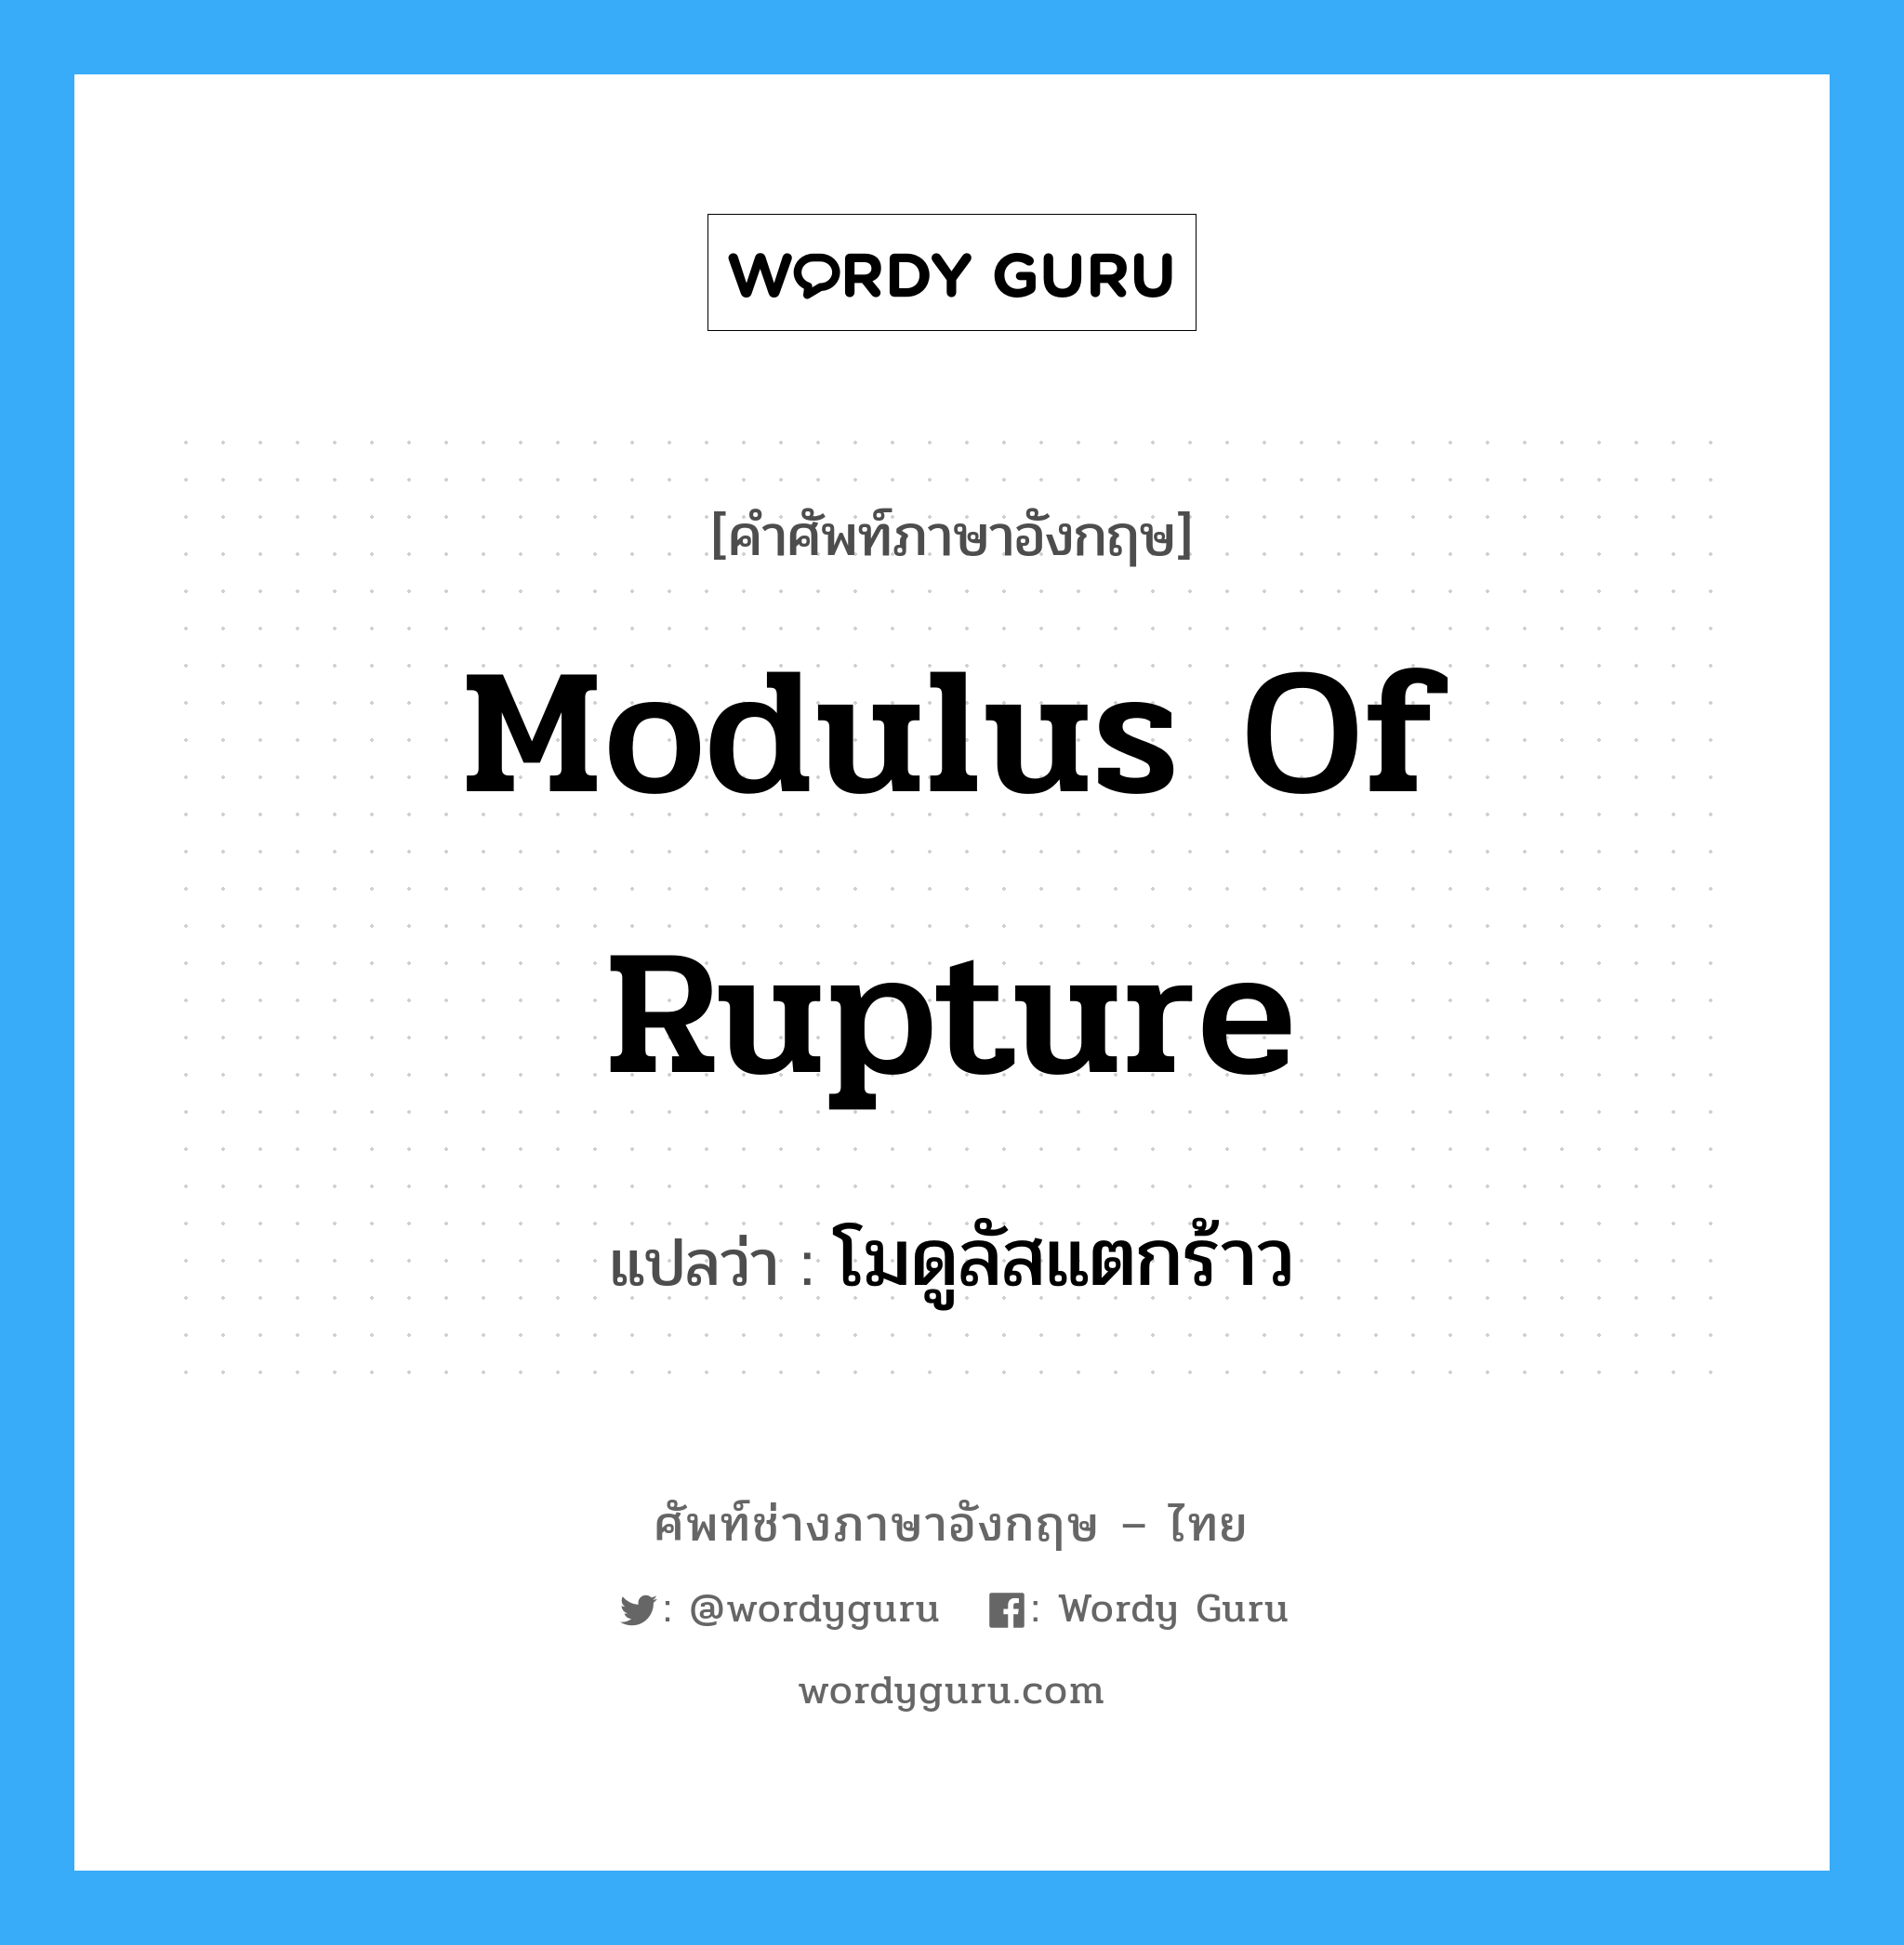 modulus of rupture แปลว่า?, คำศัพท์ช่างภาษาอังกฤษ - ไทย modulus of rupture คำศัพท์ภาษาอังกฤษ modulus of rupture แปลว่า โมดูลัสแตกร้าว